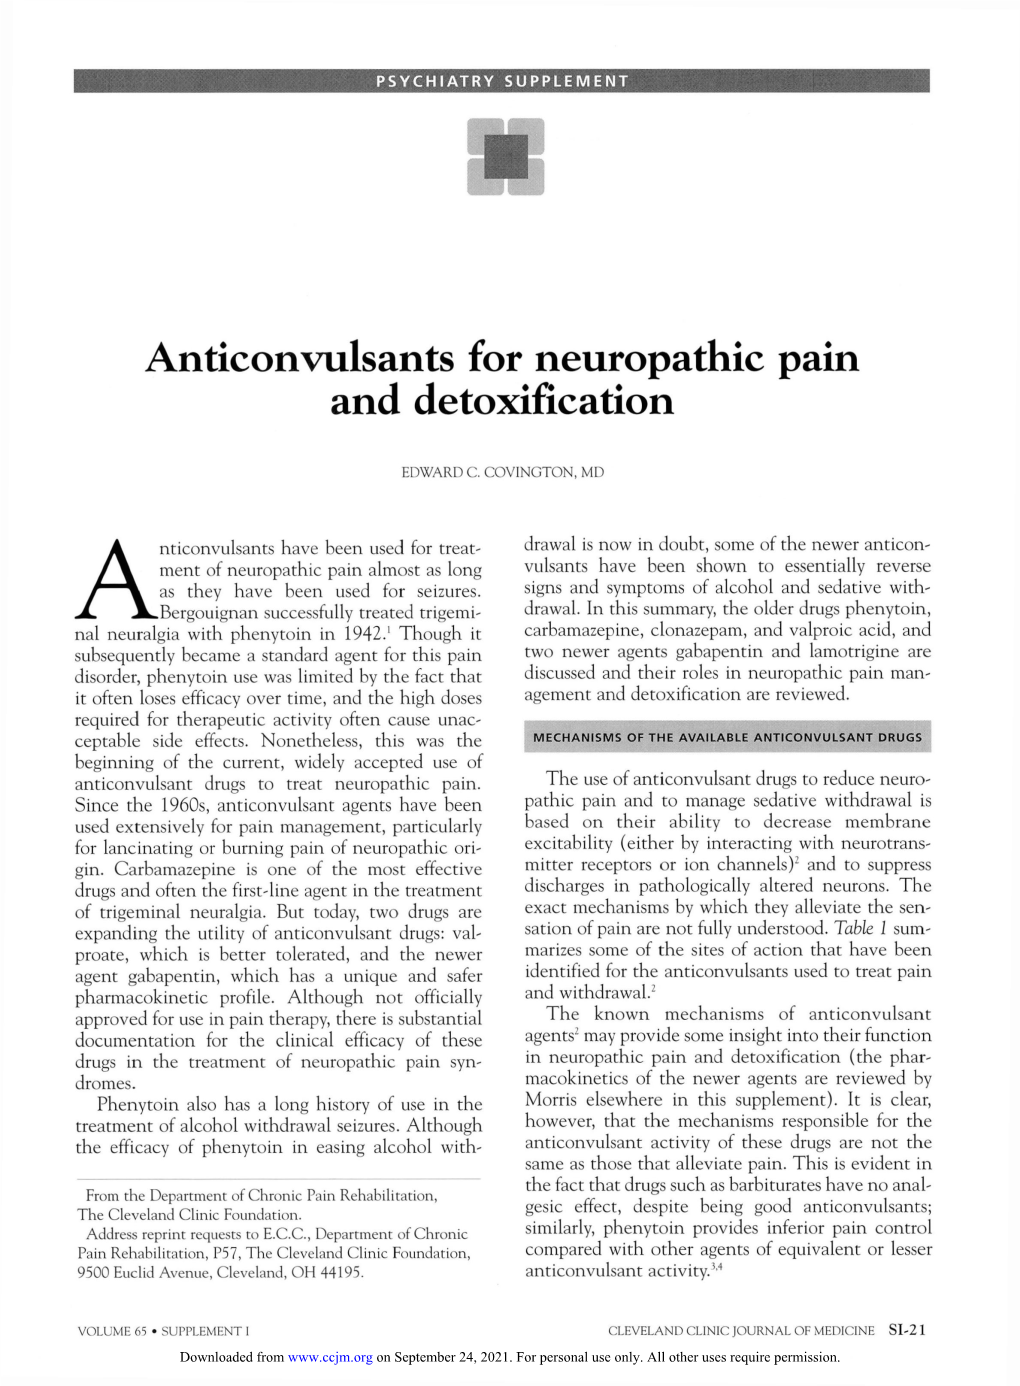 Anticonvulsants for Neuropathic Pain and Detoxification